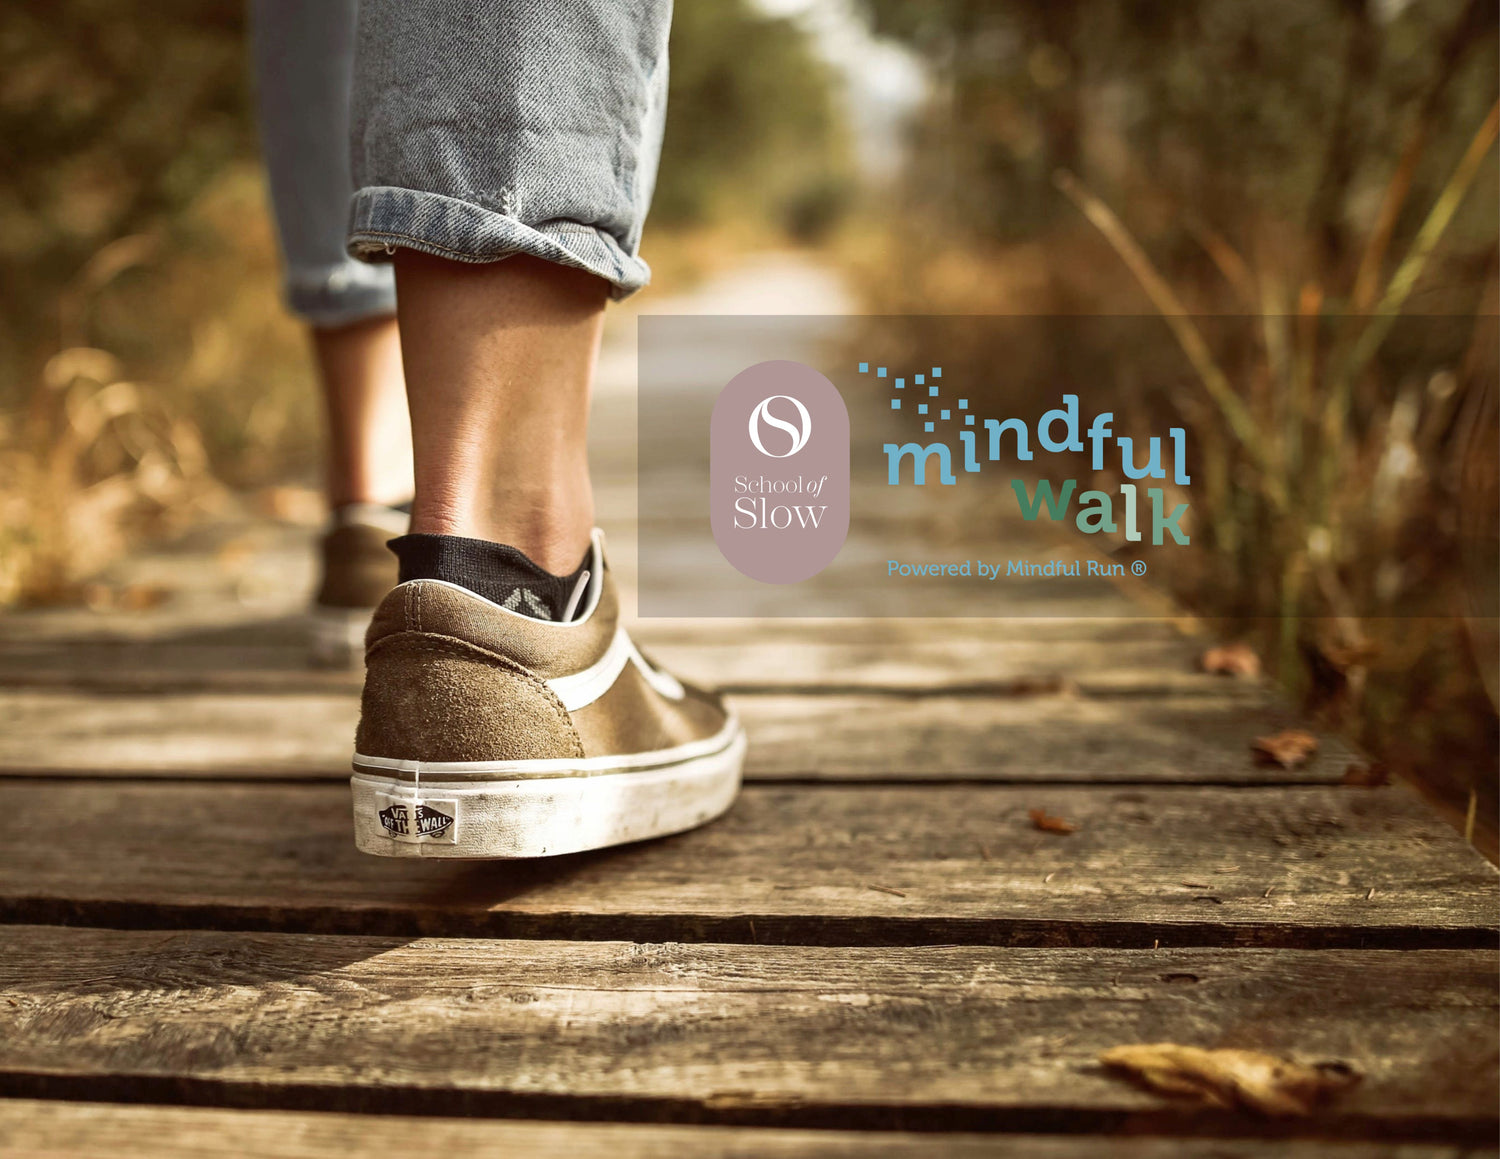 Mindful Walk